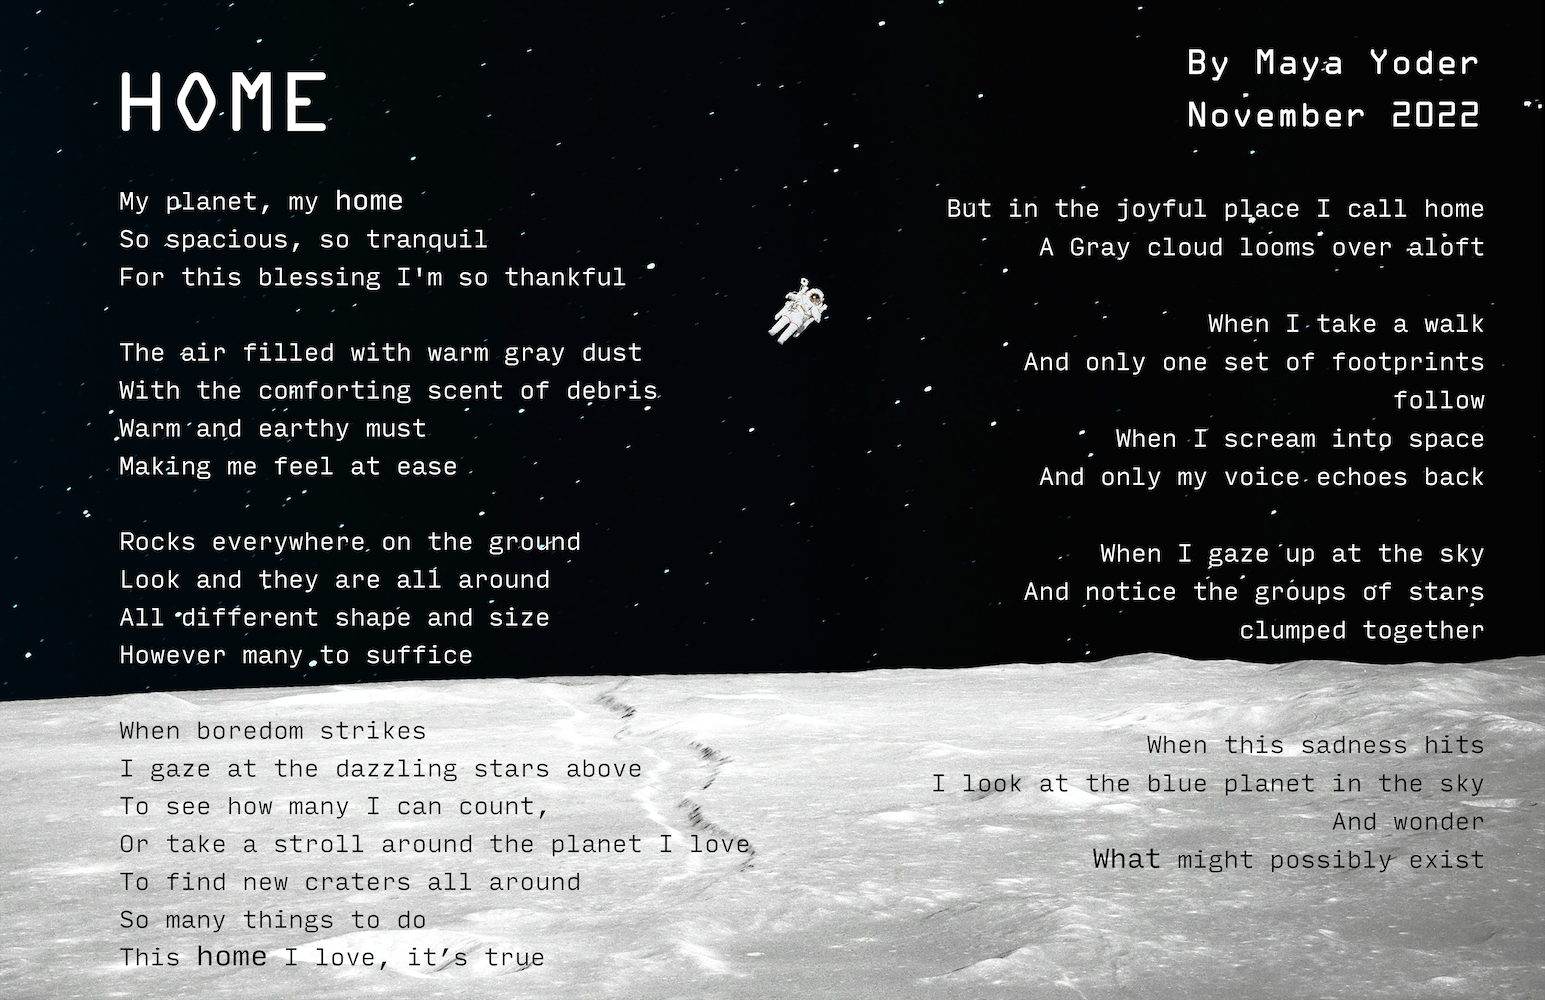 Poem by Maya Yoder Home